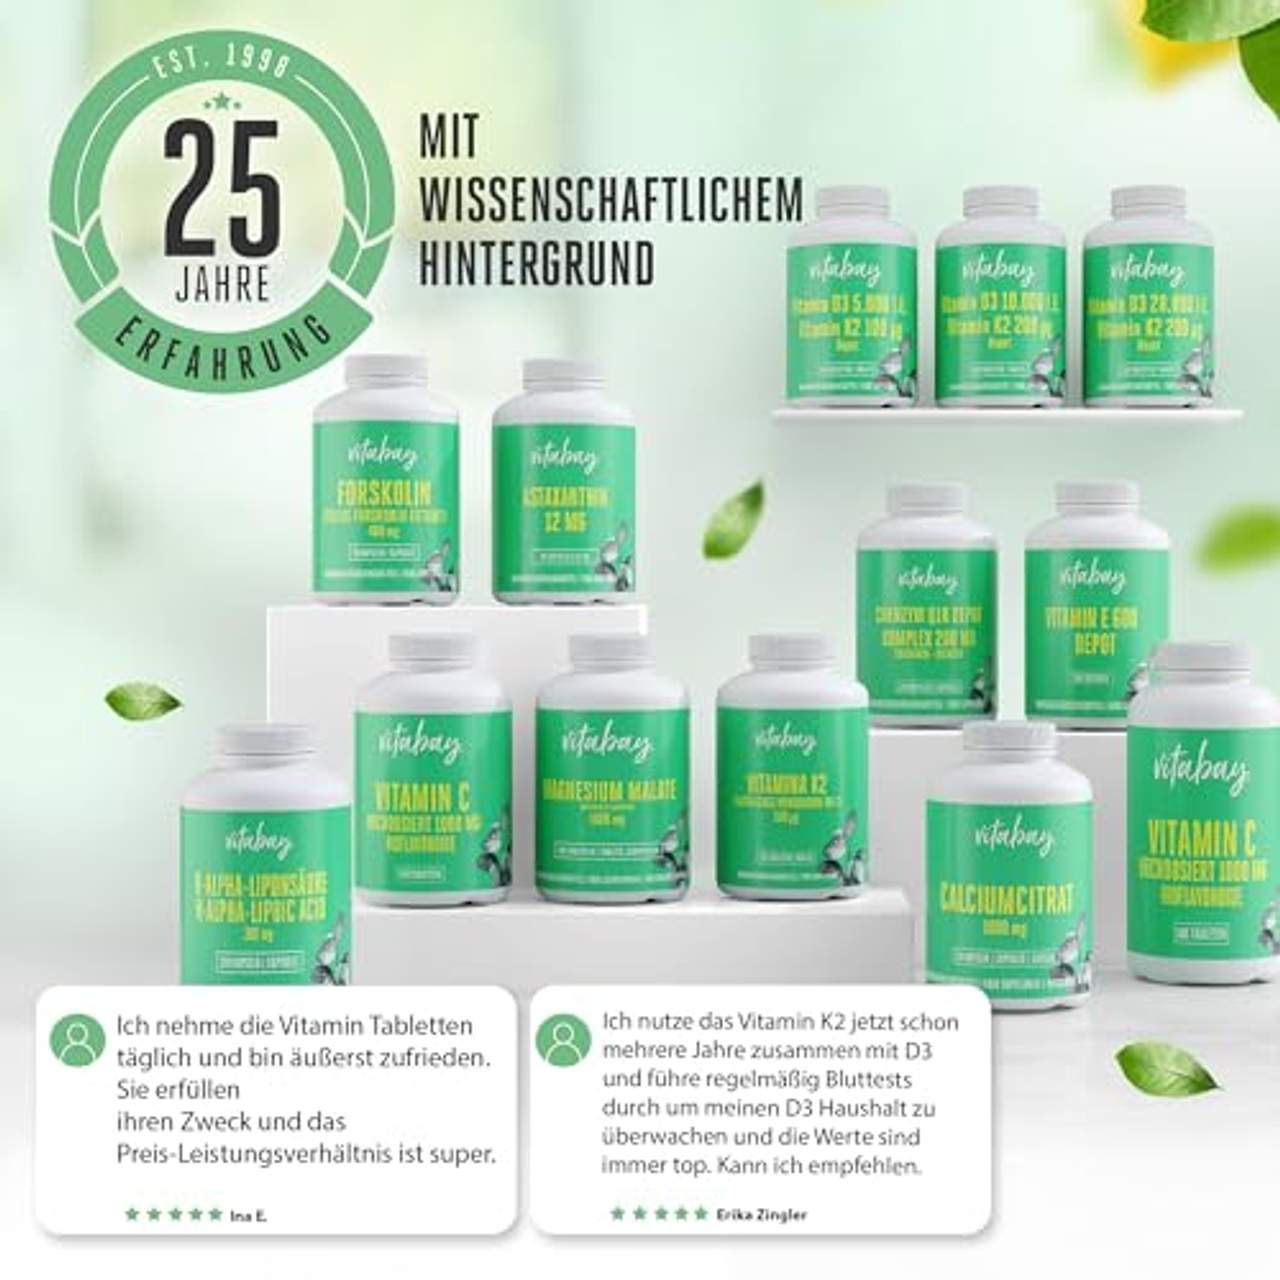 Vitabay Vitamin K2 100 mcg